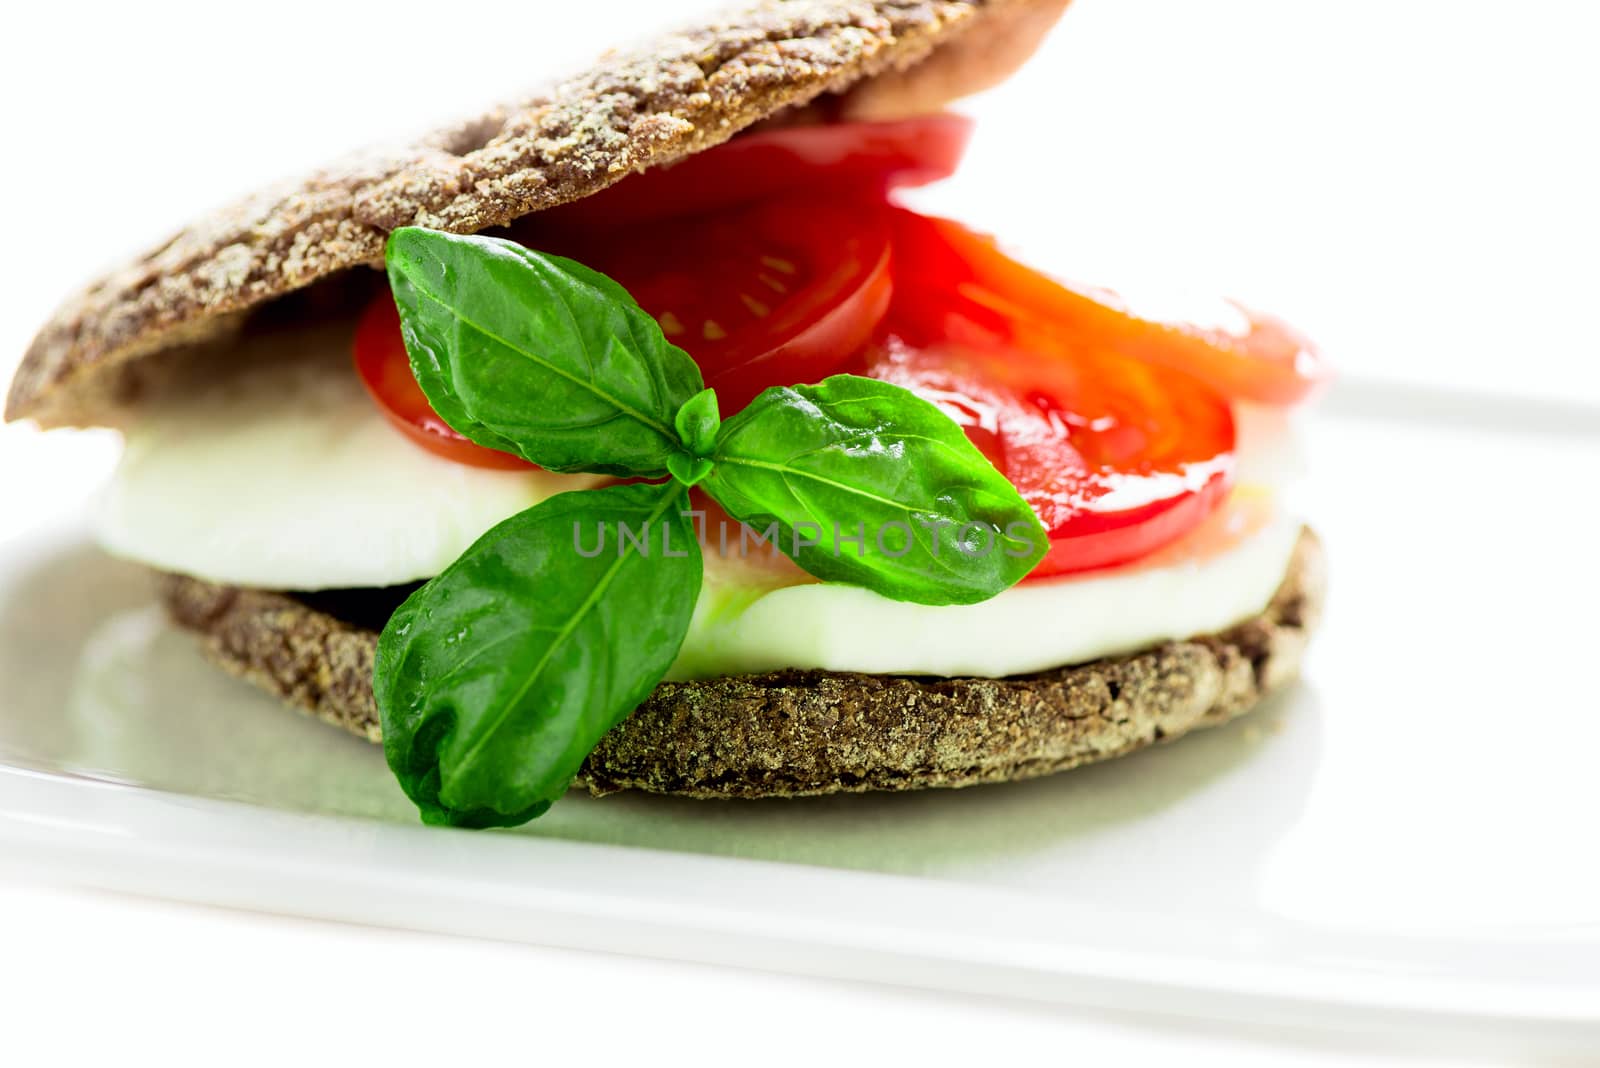 Sandwich with mozzarella, tomatoes and rye bread